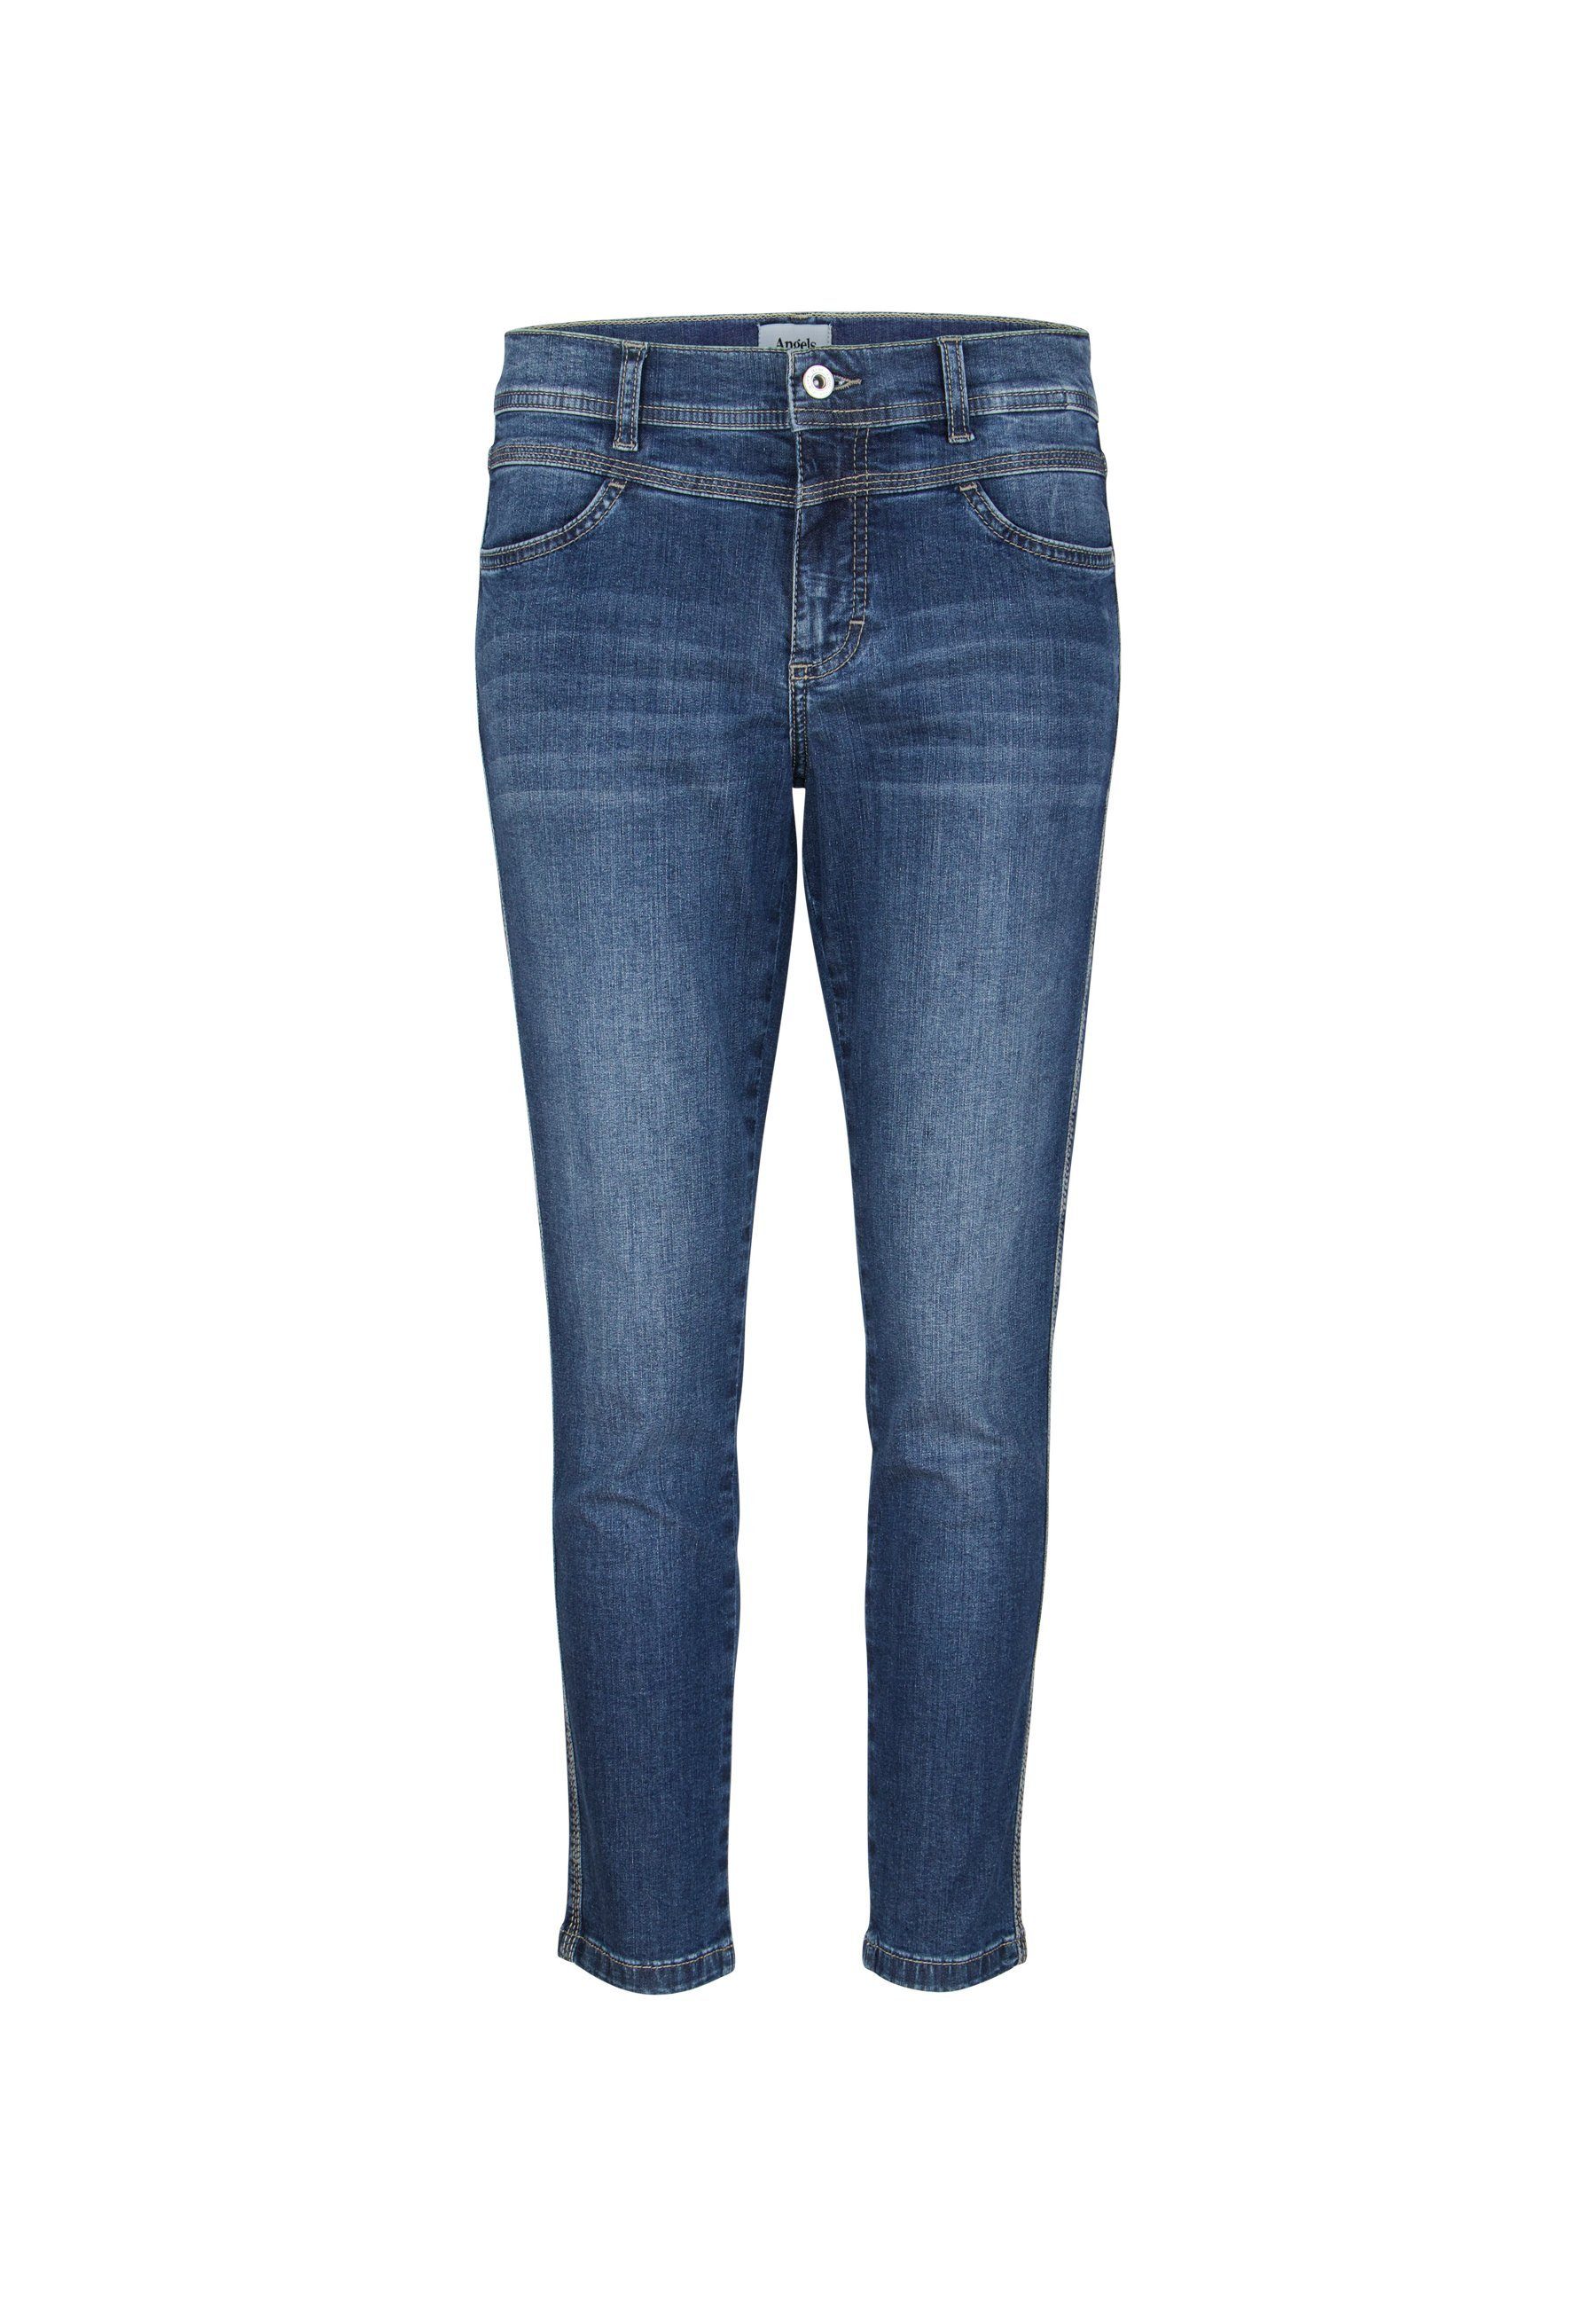 4-Pocket-Jeans Ornella ANGELS Modern Label-Applikationen 7/8-Jeans blau mit